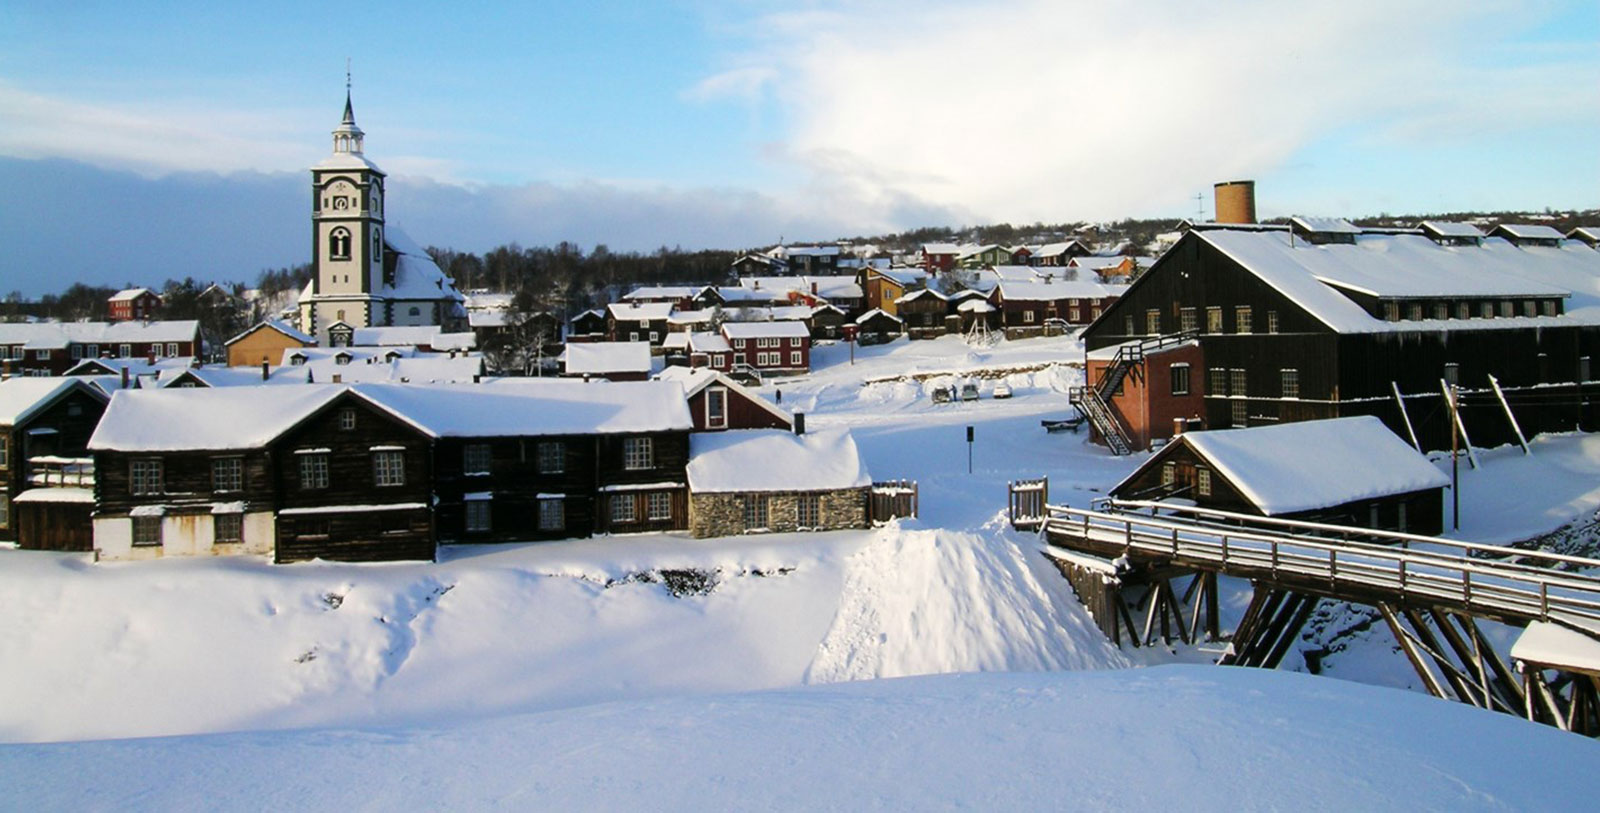 Explore the Røros Mining Town, a UNESCO World Heritage site.